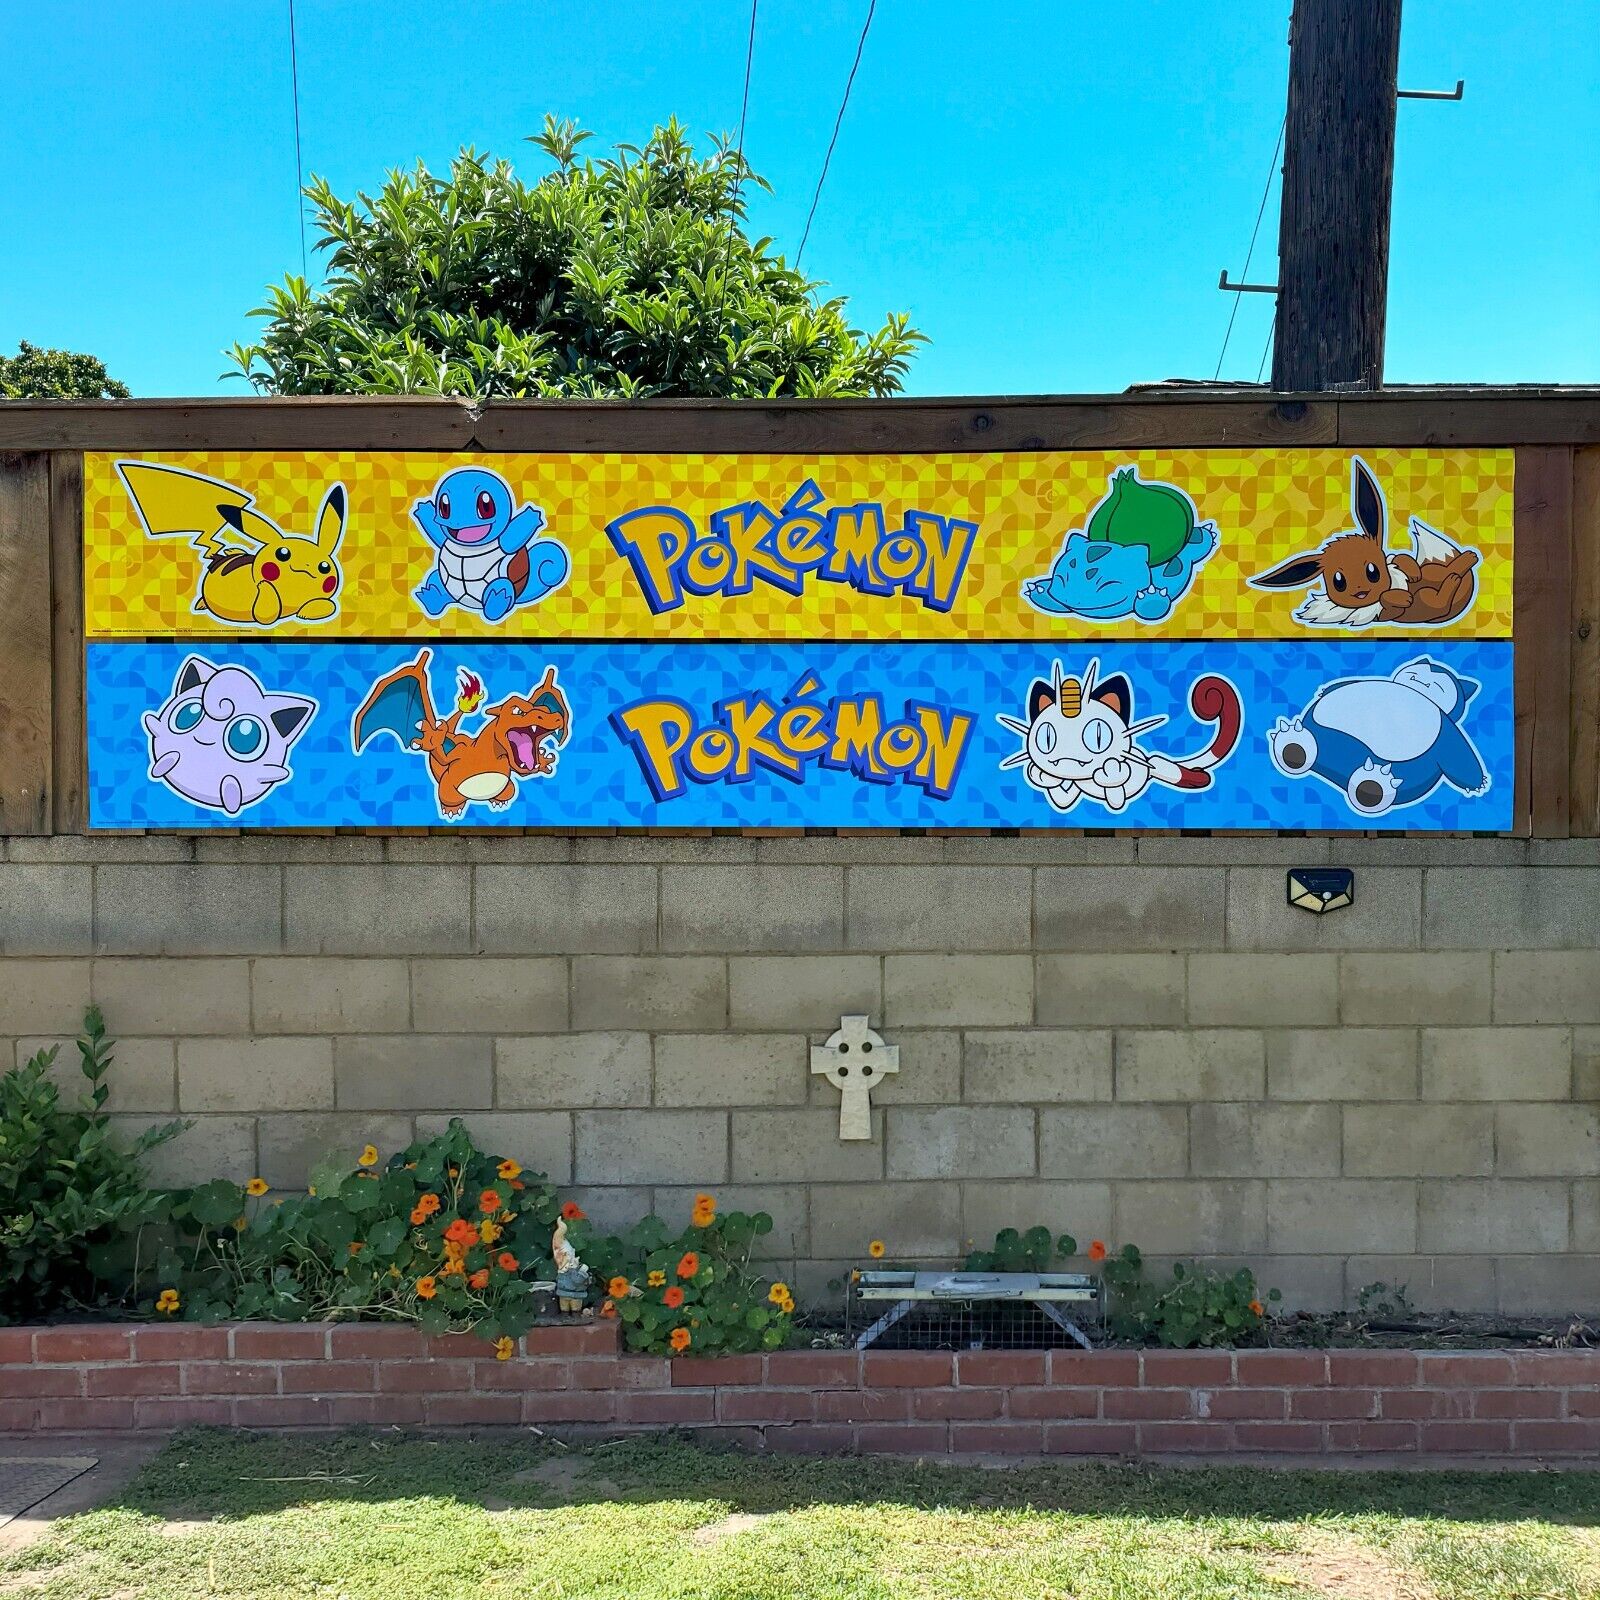 Pokémon Banner Poster Sign Backdrop Anime - Pikachu Charizard RARE - 10 FEET